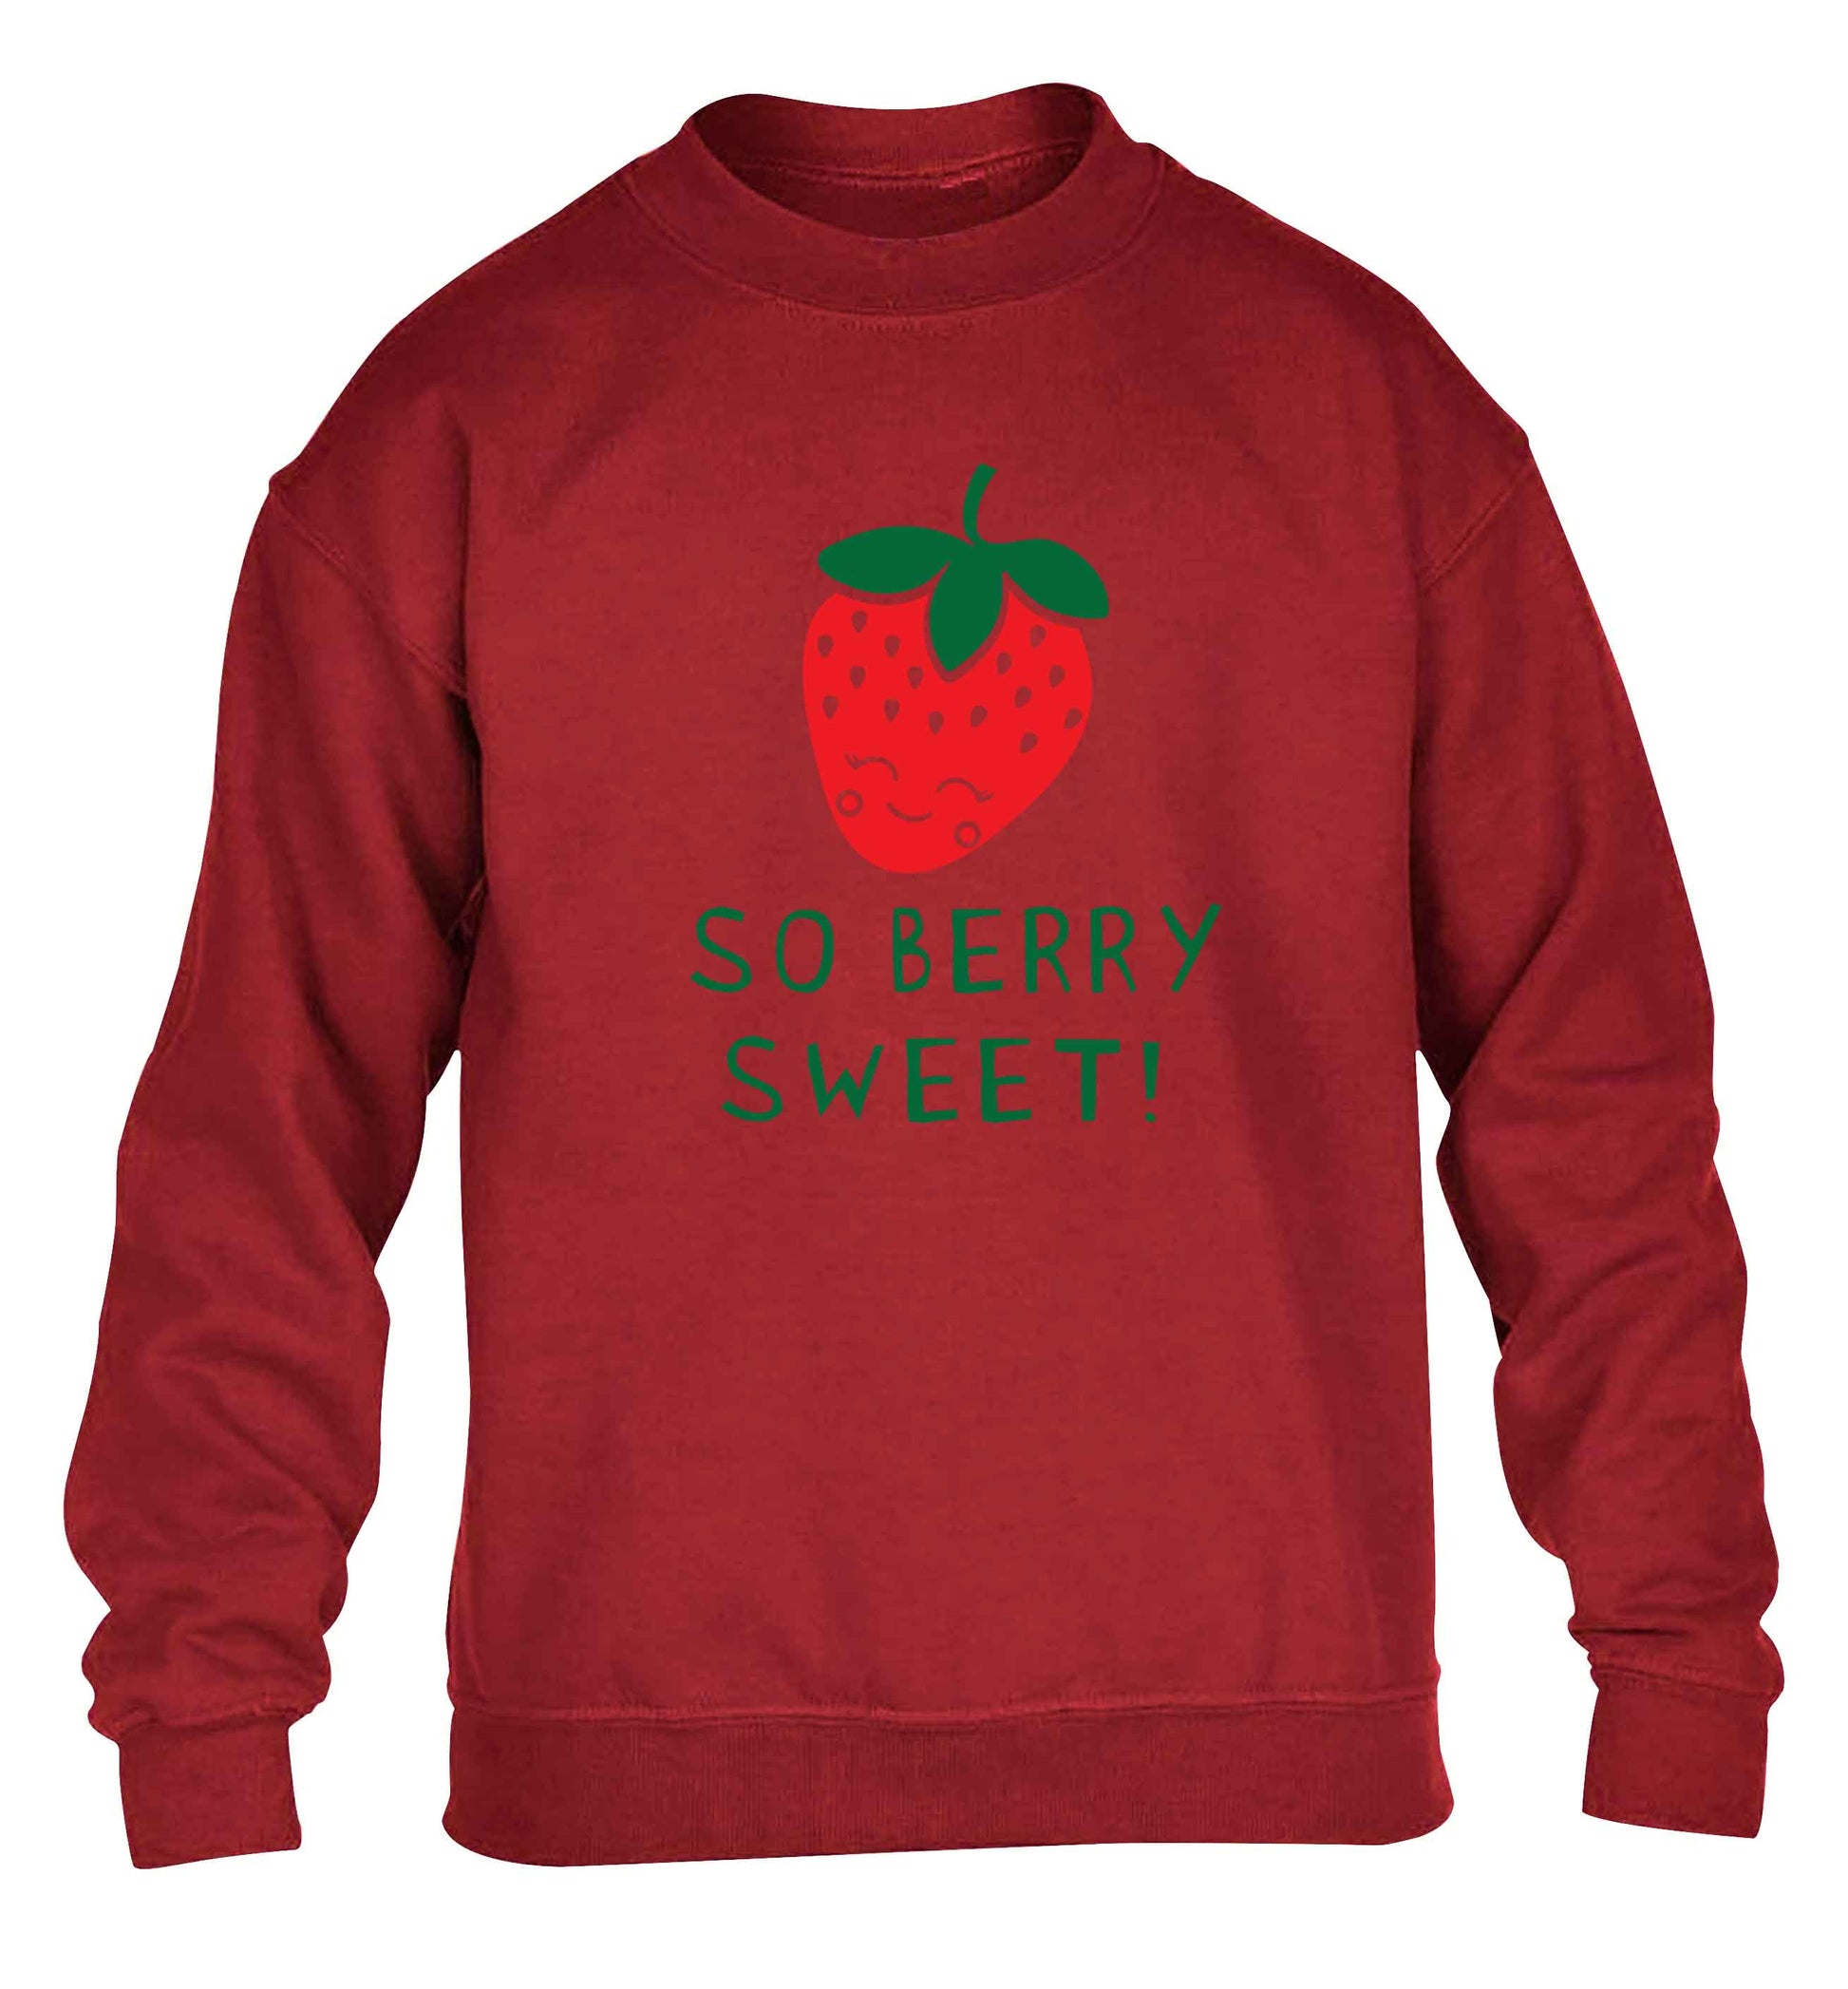 So berry sweet children's grey sweater 12-13 Years